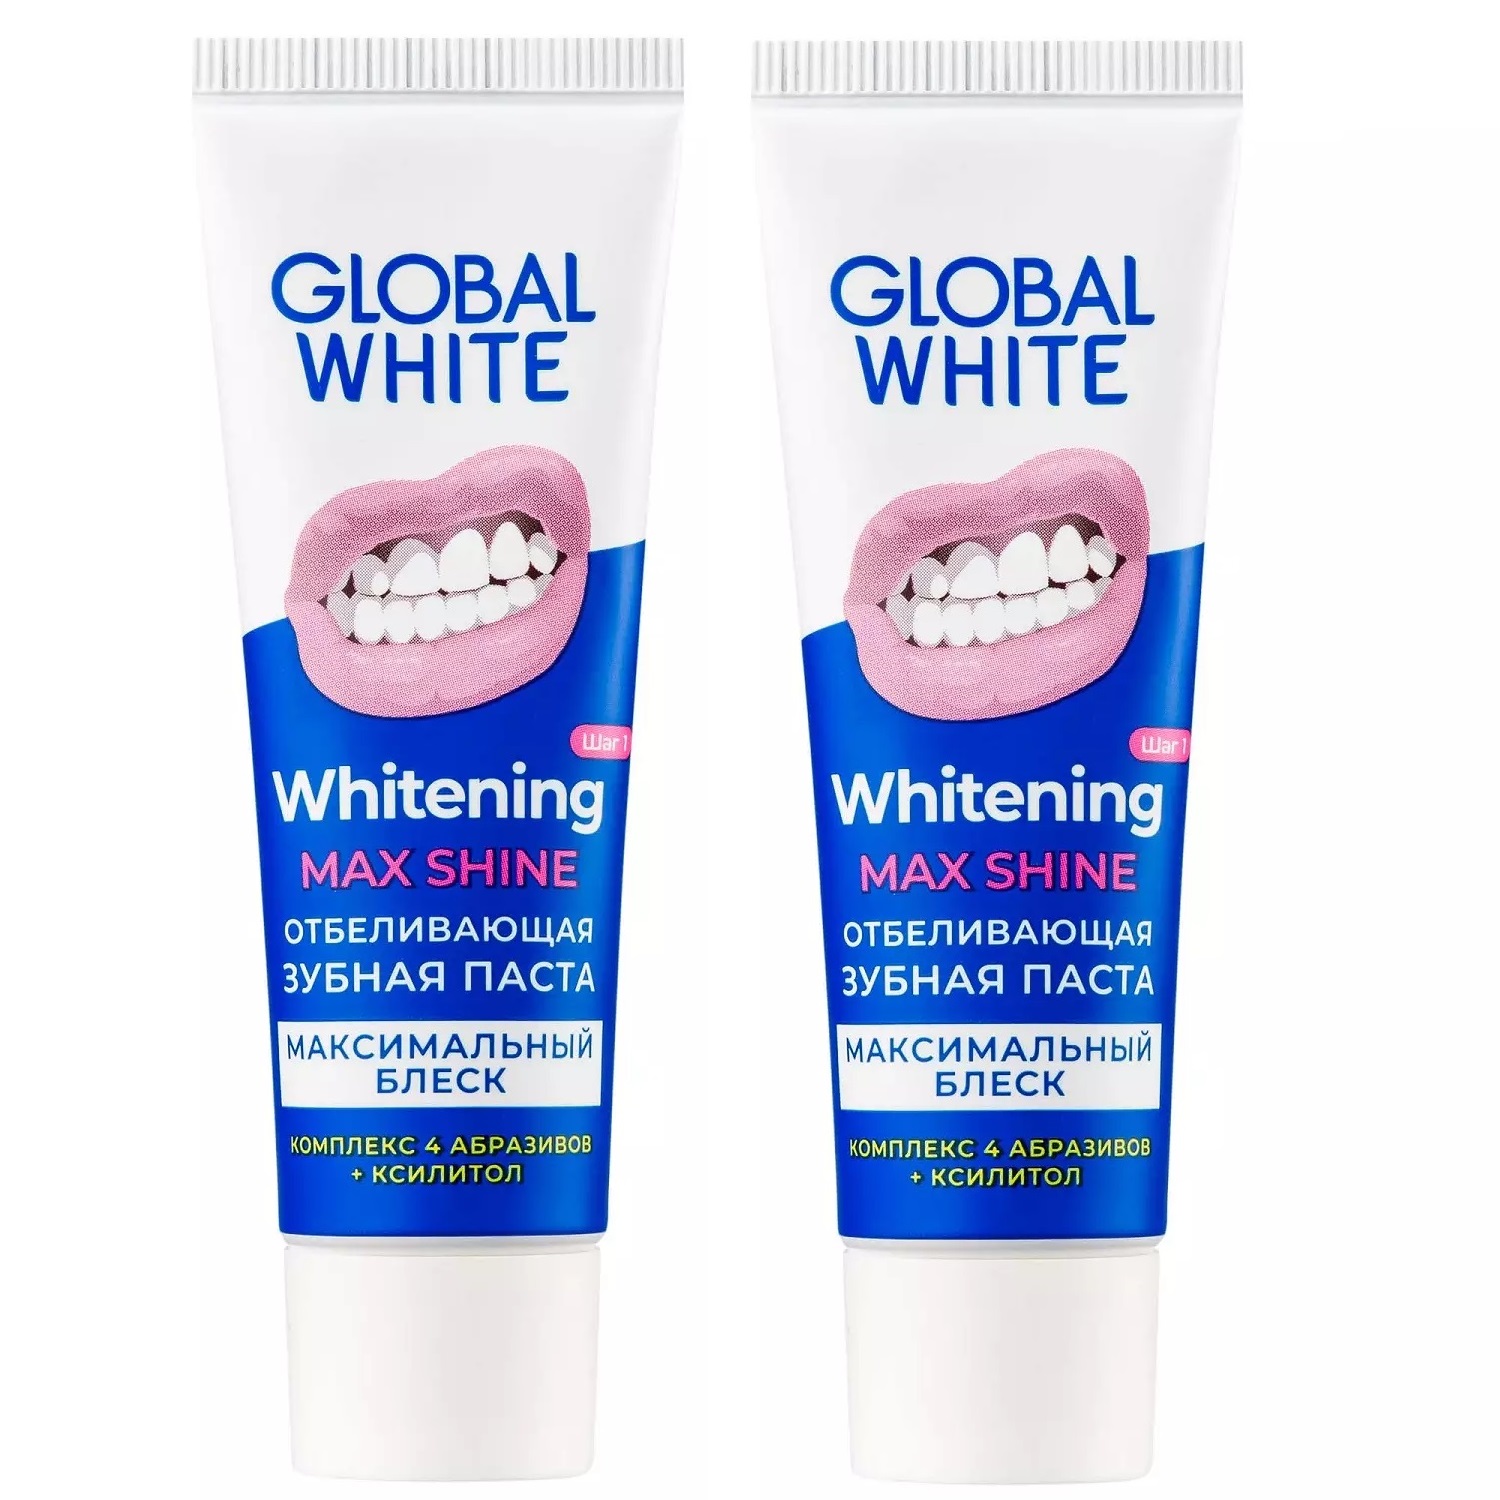 Global White Набор: отбеливающая зубная паста Max Shine, 2 х 30 мл (Global White, Подготовка к отбеливанию) отбеливающая зубная паста global white max shine 100 г